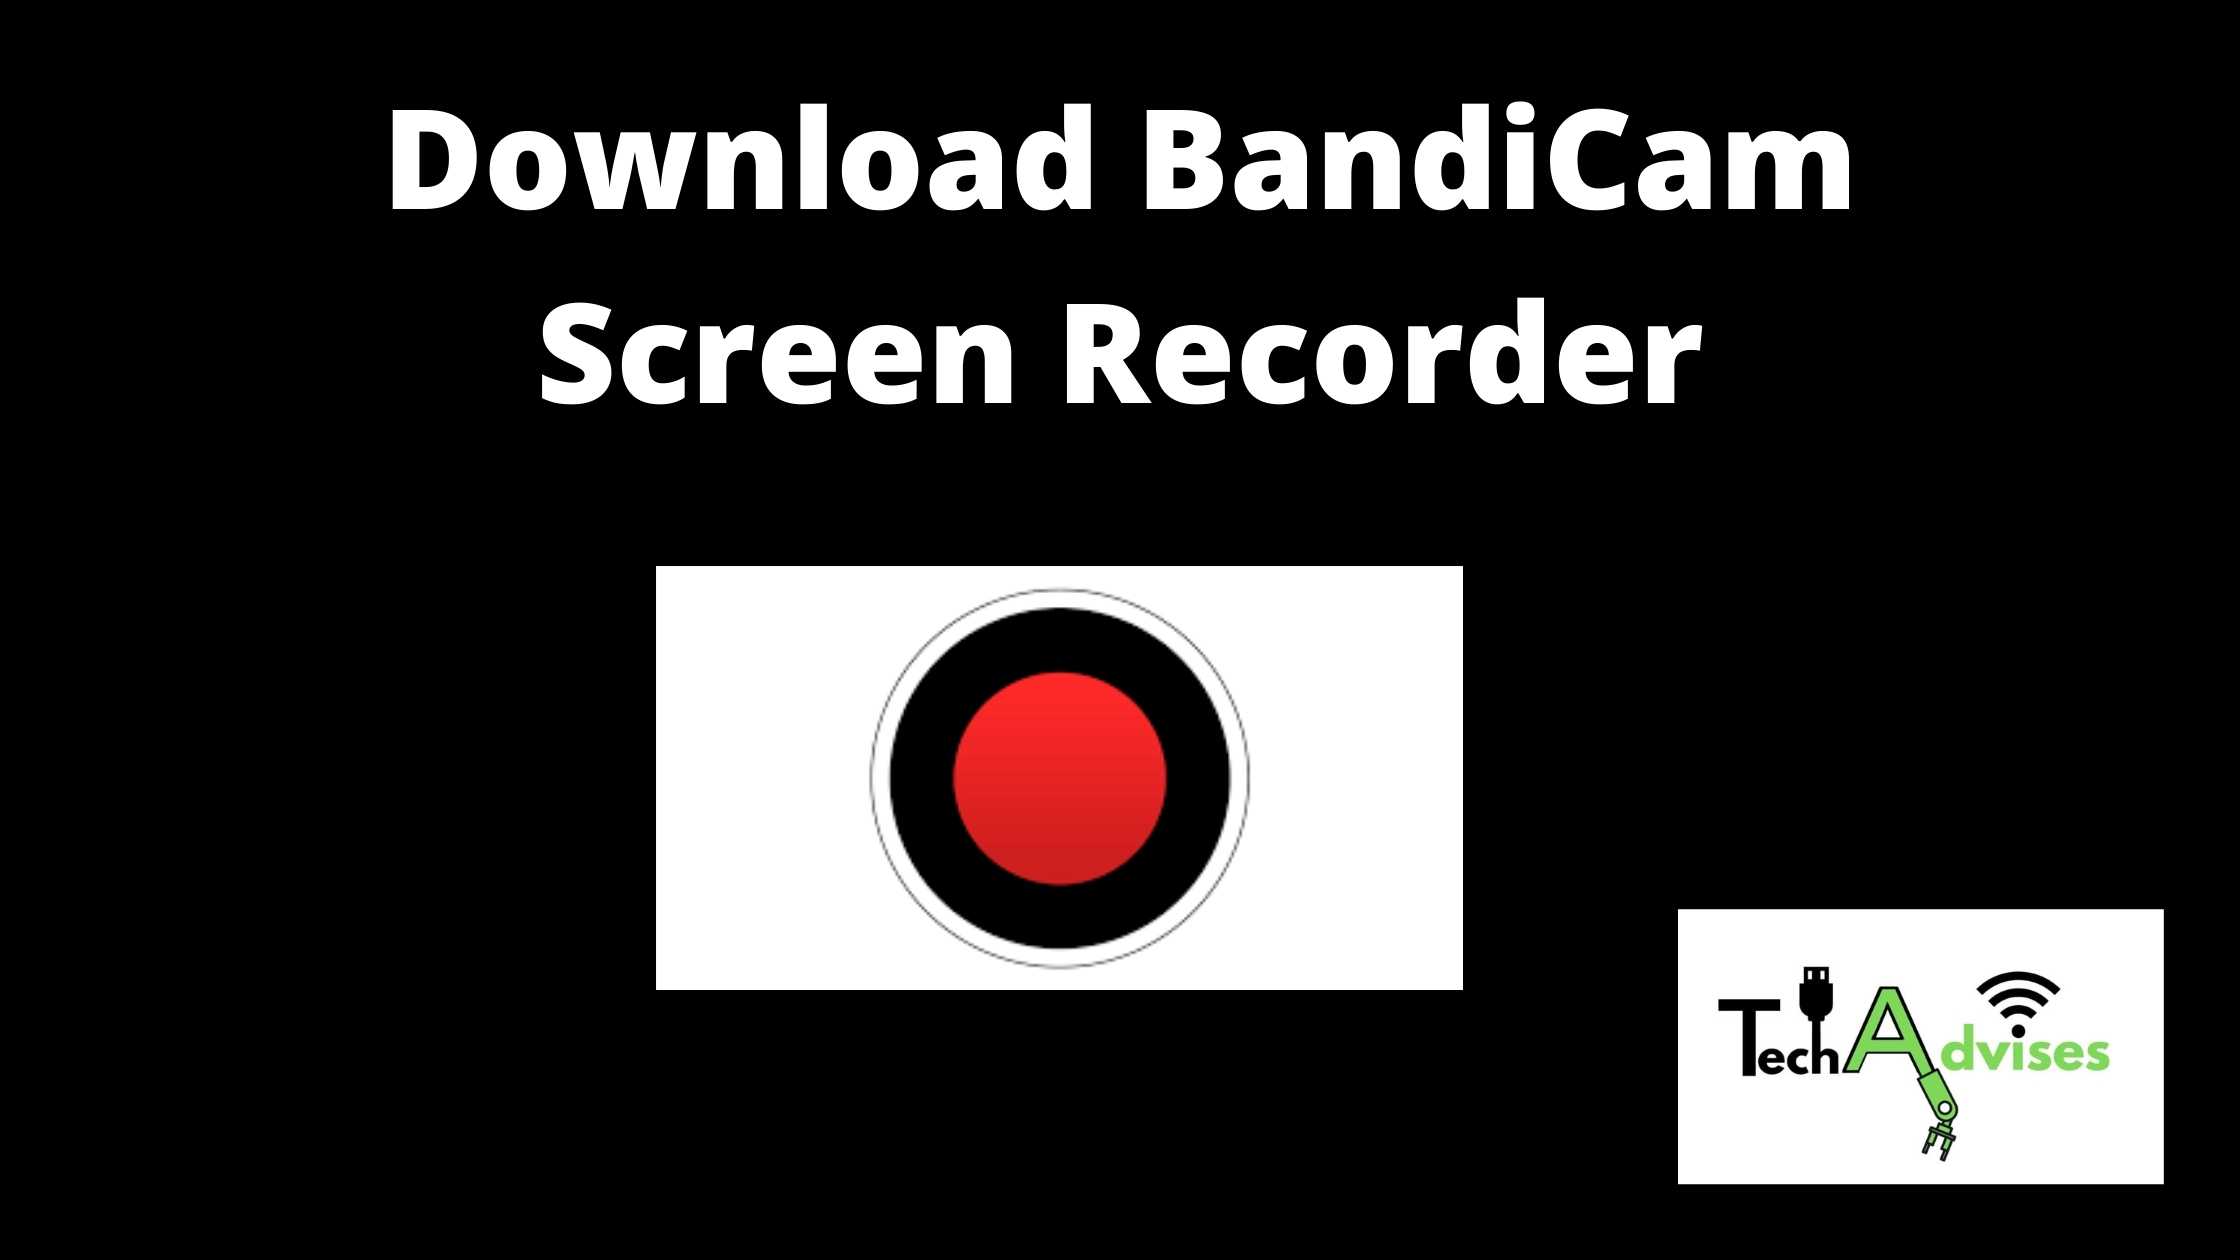 Bandicam Screen Recorder for Windows